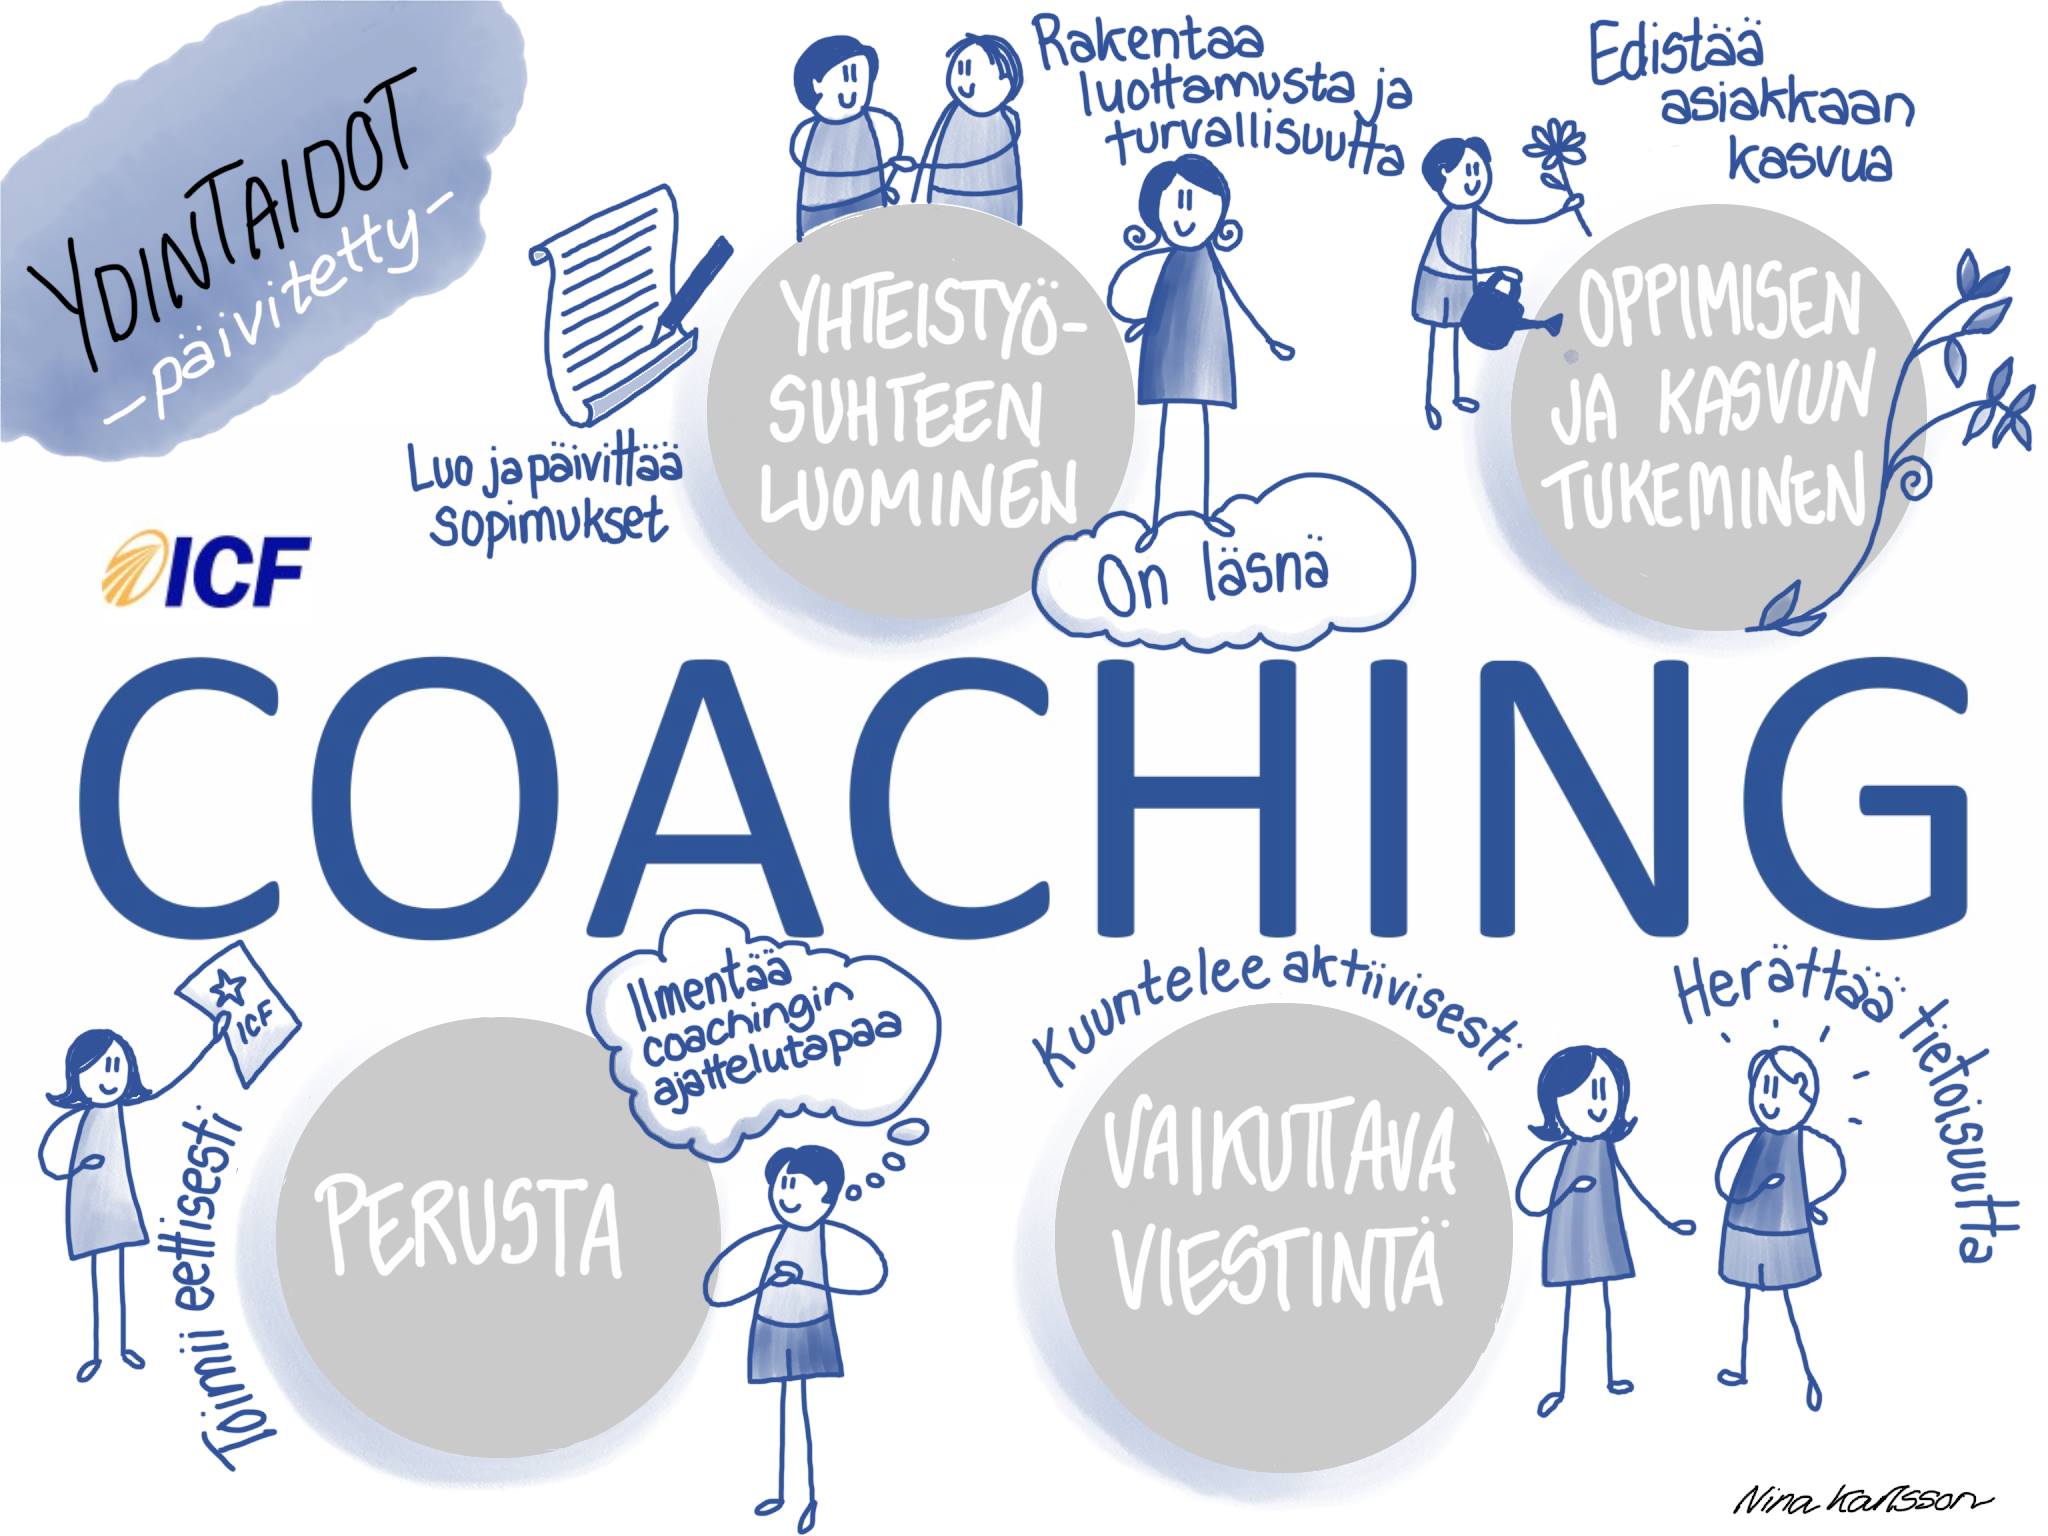 coaching, valmennus, #ExperienceCoaching #icw2020 #ICFFinland #AmmattiCoach #CoachingVaikuttaa #Suomencoachingyhdistys